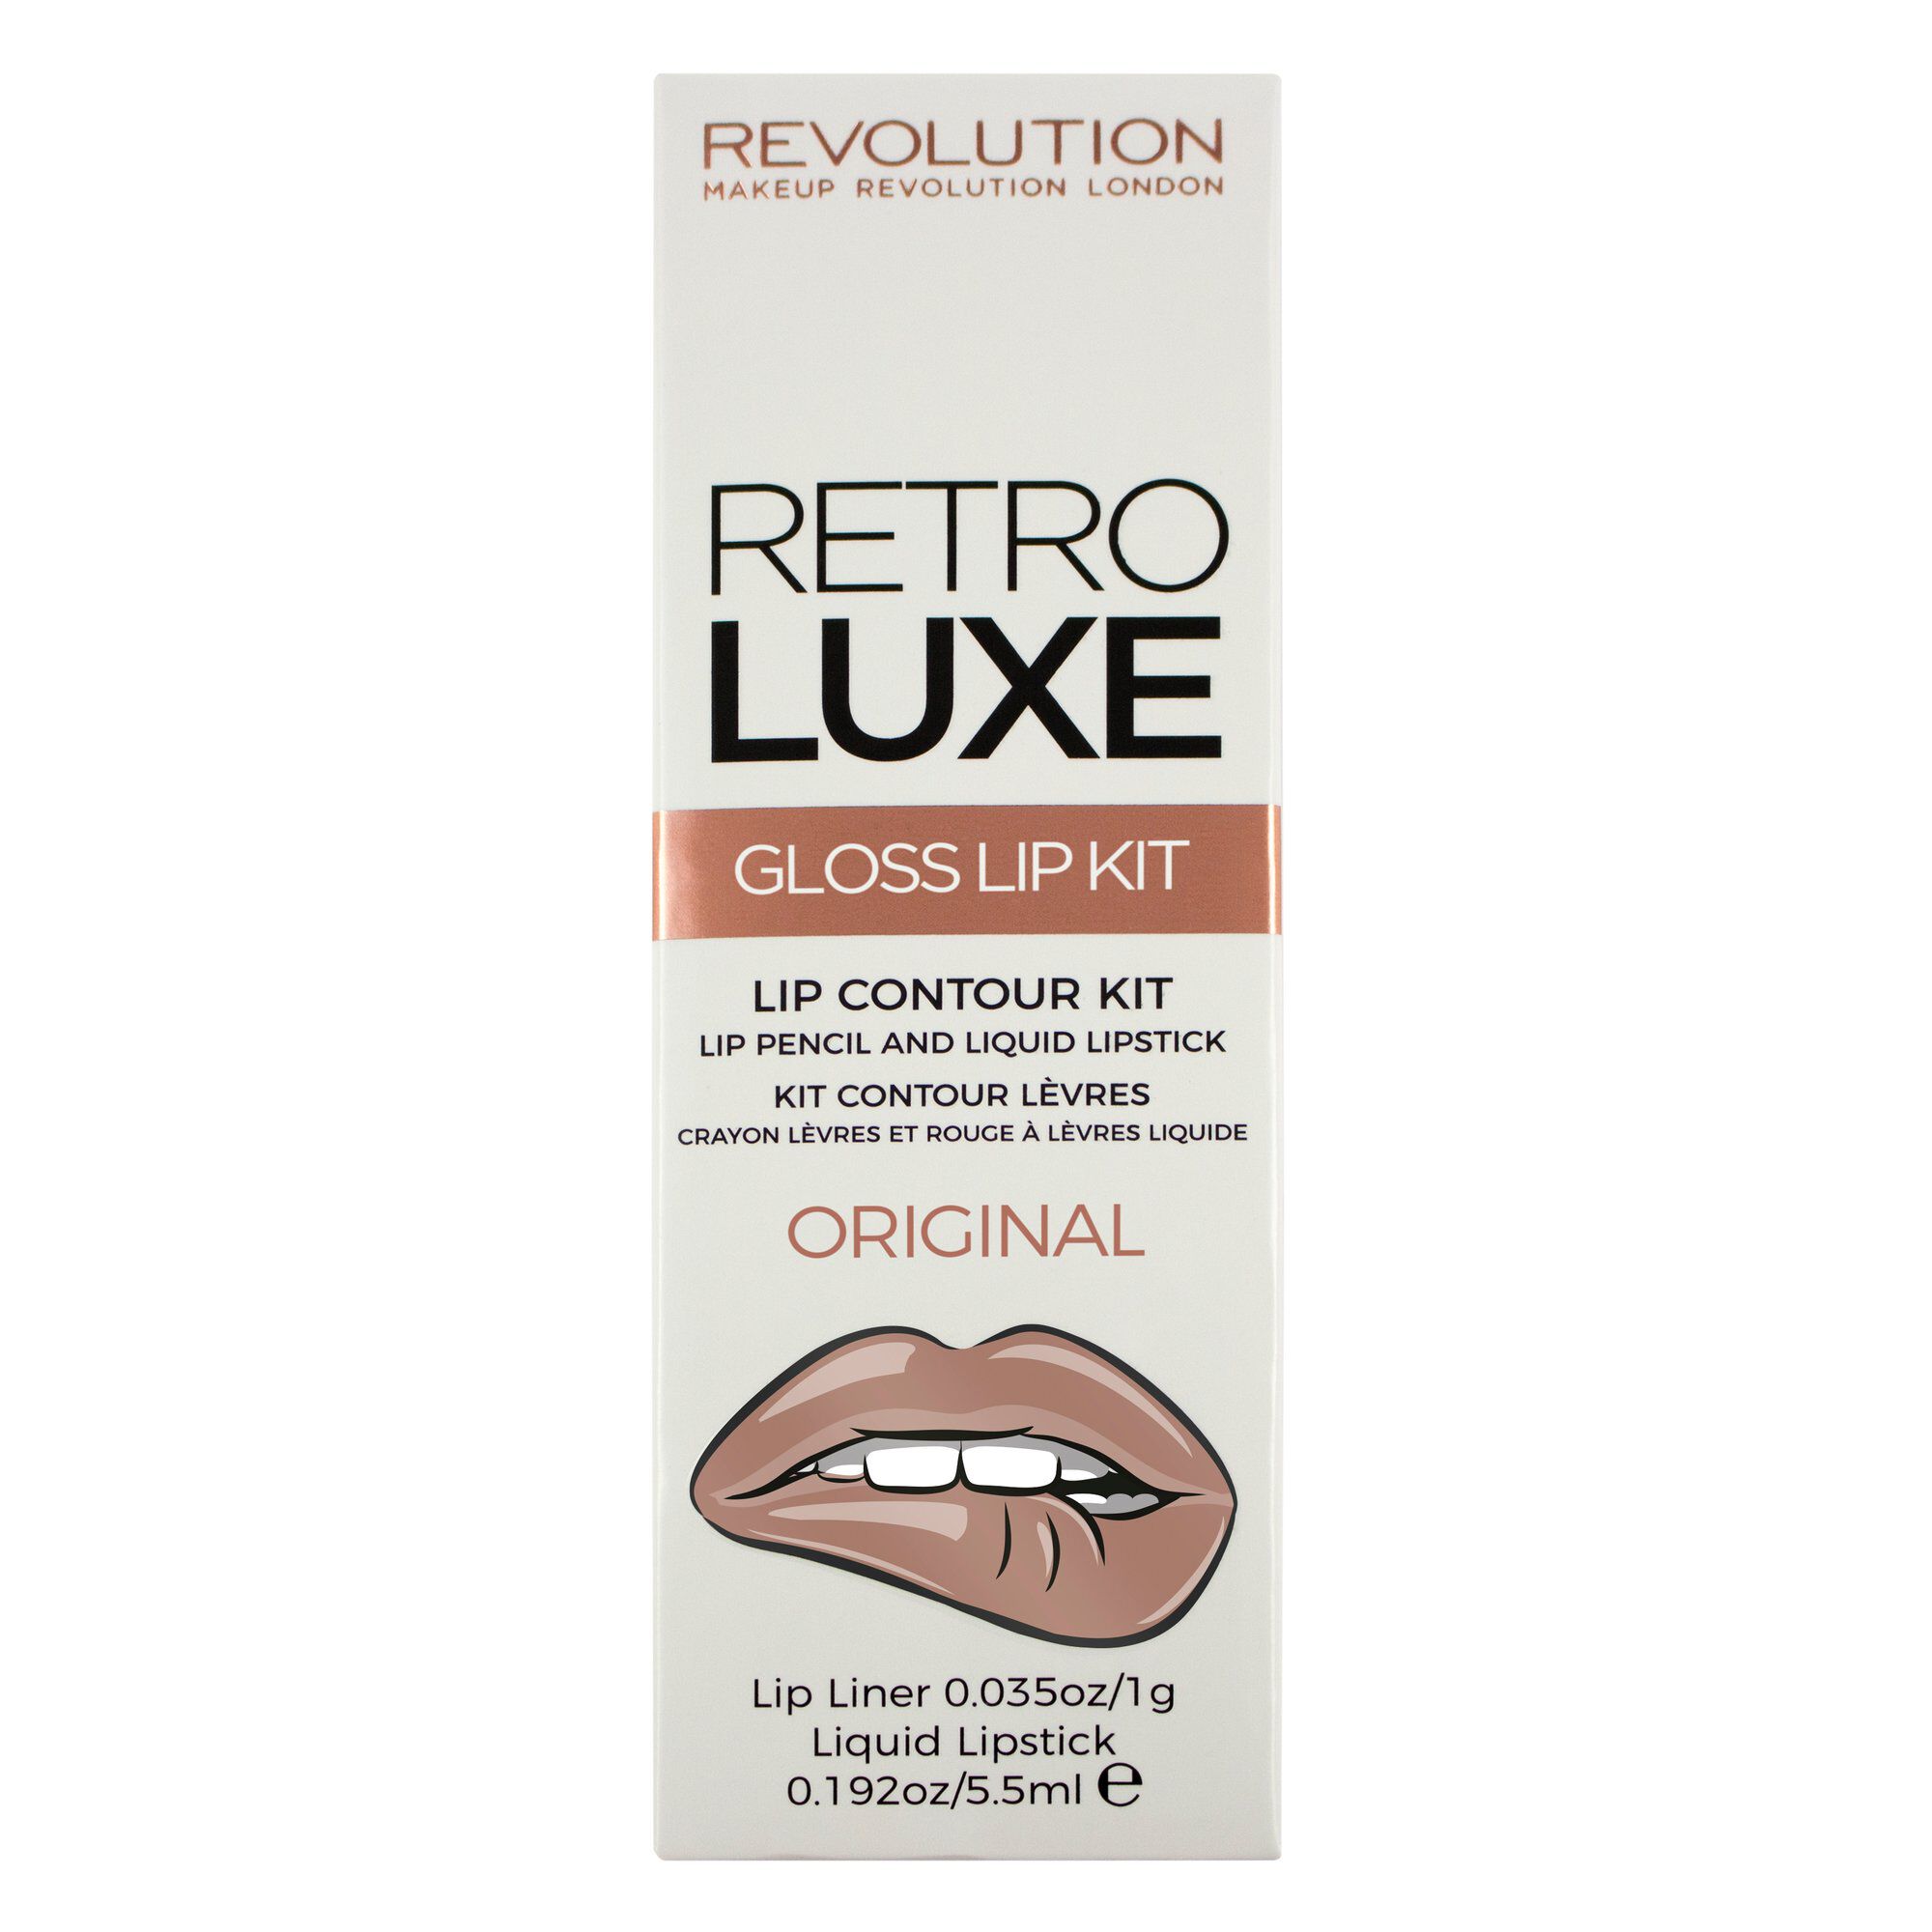 Bevatten Druif wol Retro Luxe Kits Gloss Original | Revolution Beauty